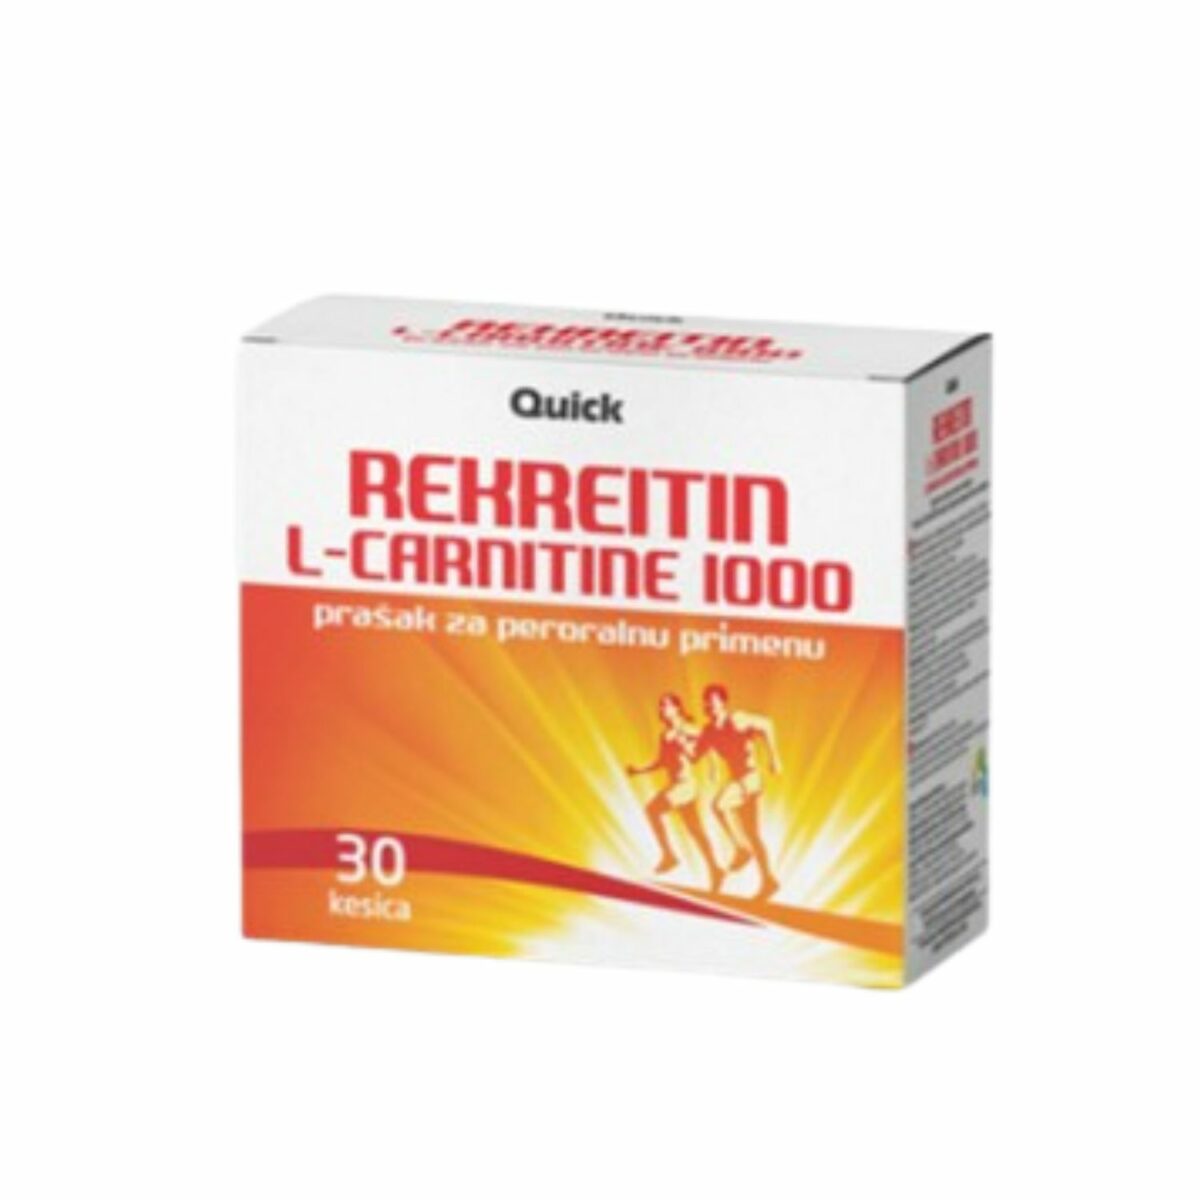 L-carnitine 1000 rekreatin 30 kesica